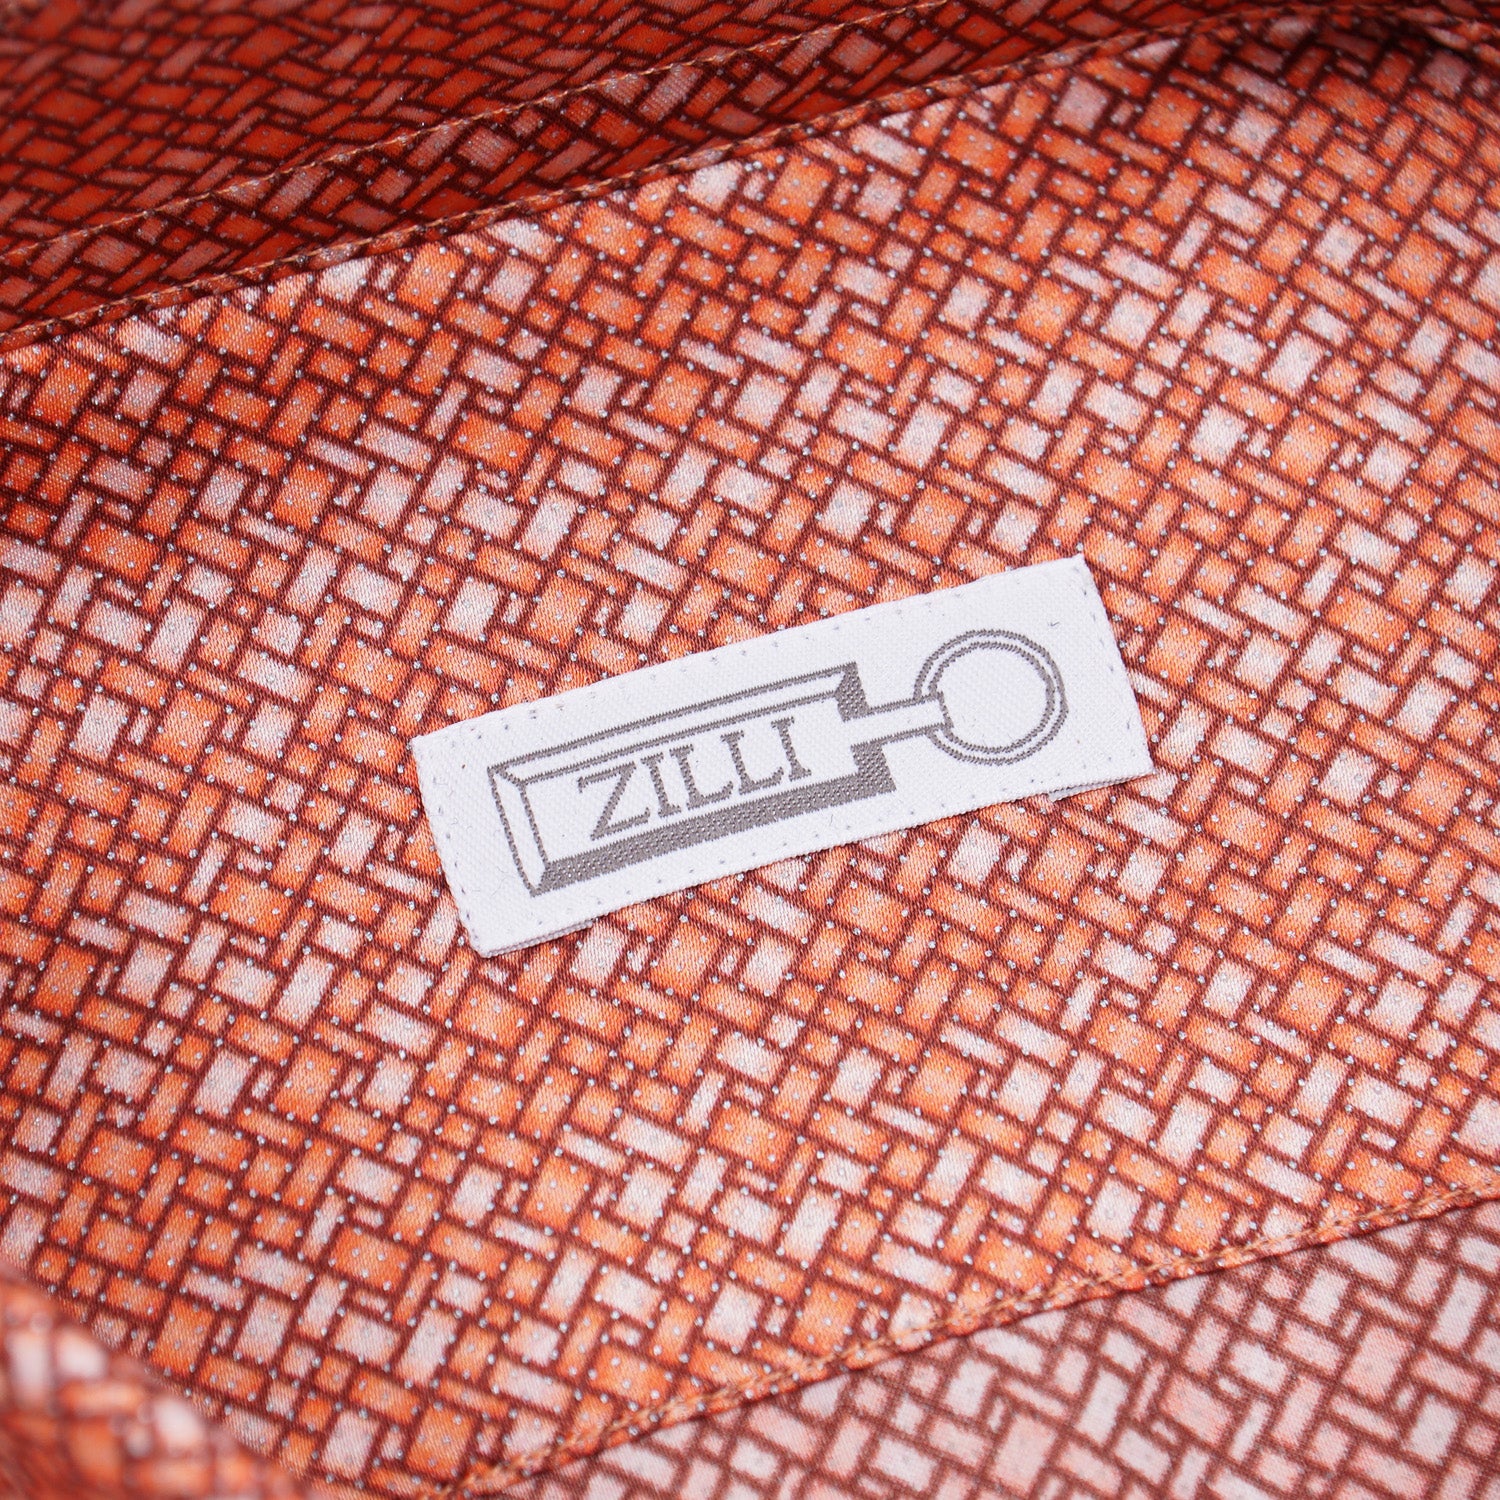 Zilli Silk Shirt in Orange Geometric Print - Top Shelf Apparel